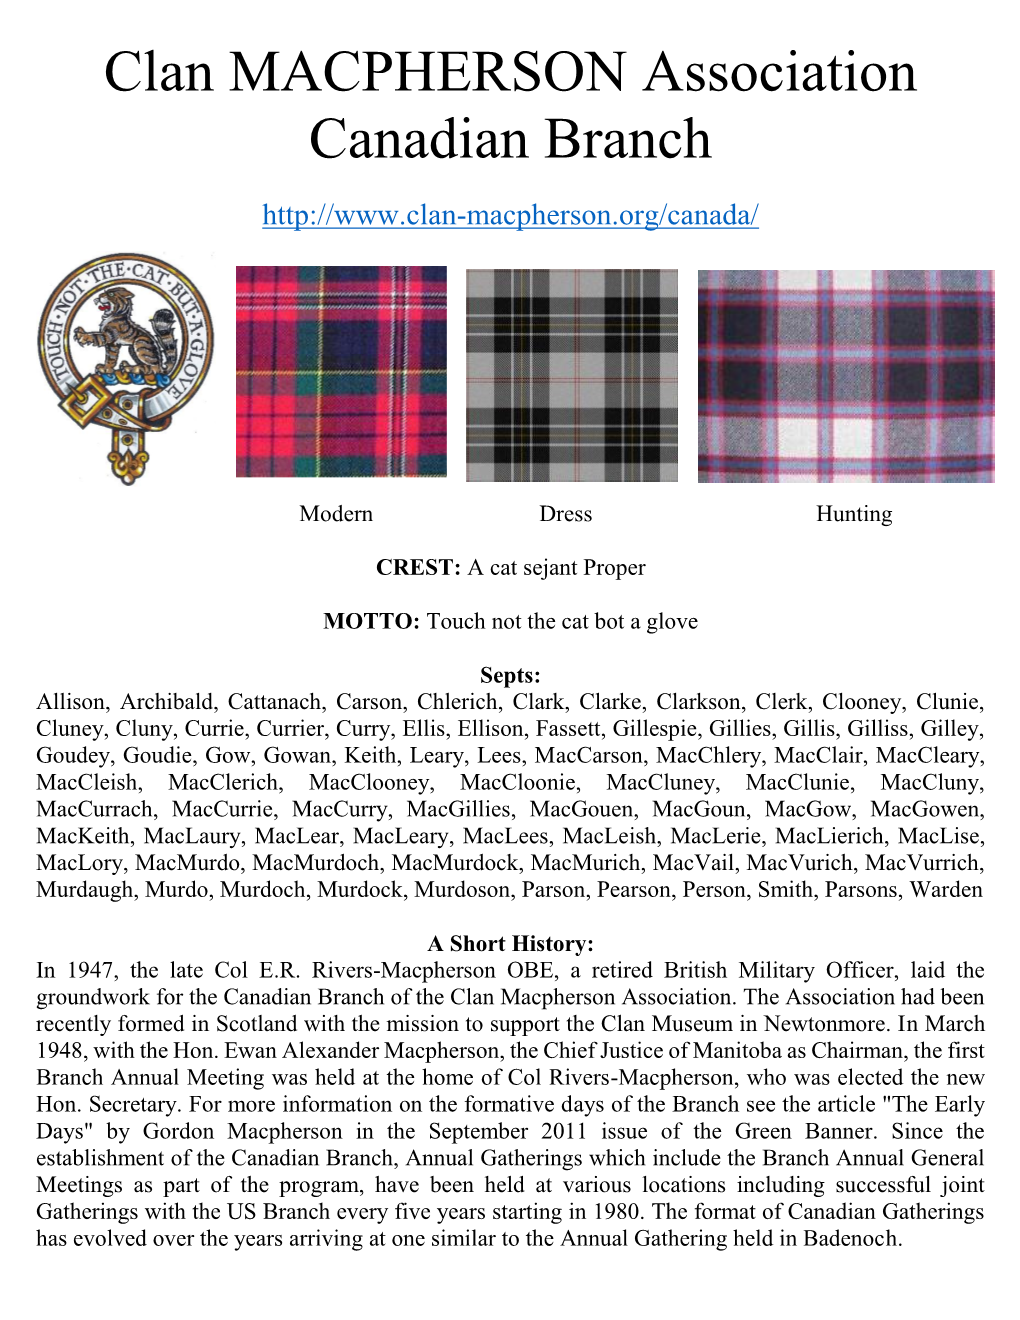 Clan MACPHERSON Association Canadian Branch